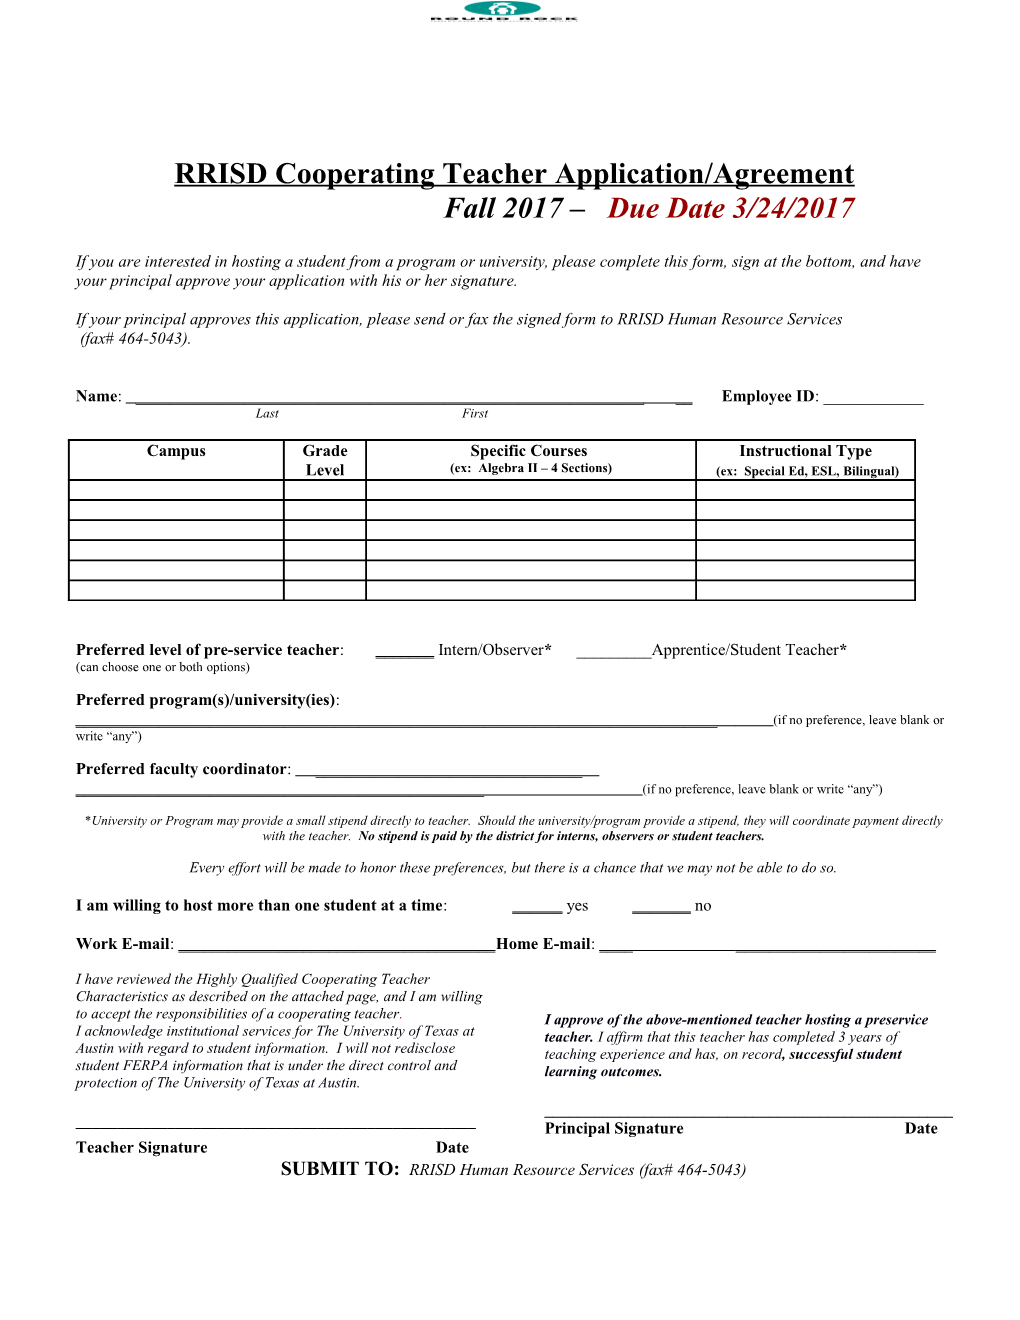 RRISD Cooperating Teacher Application/Agreement